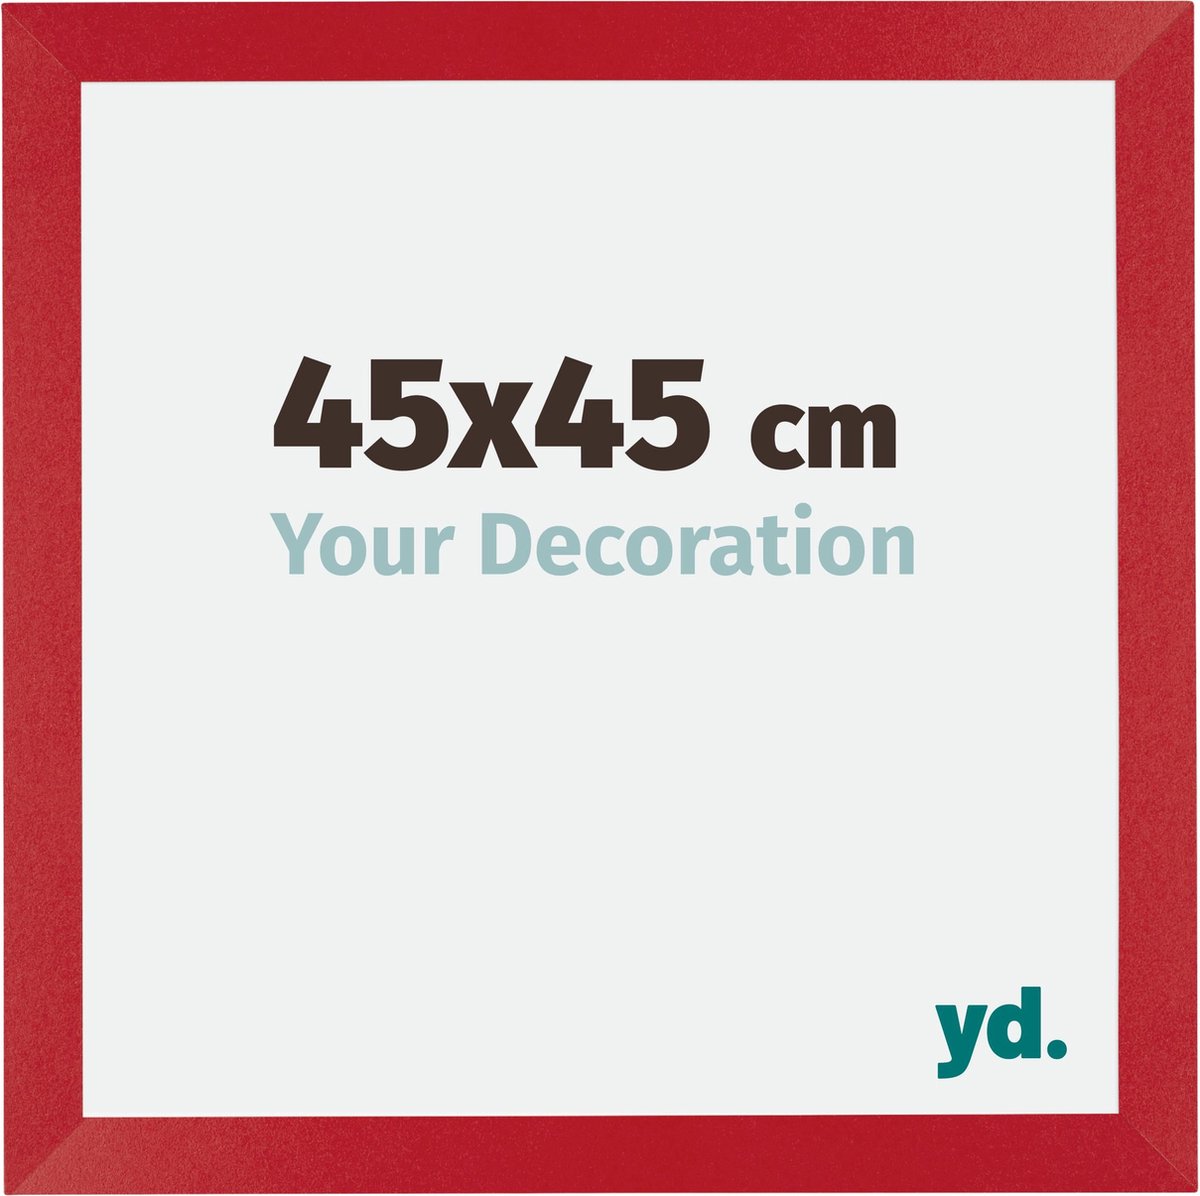 Your Decoration Mura Mdf Fotolijst 45x45cm - Rood